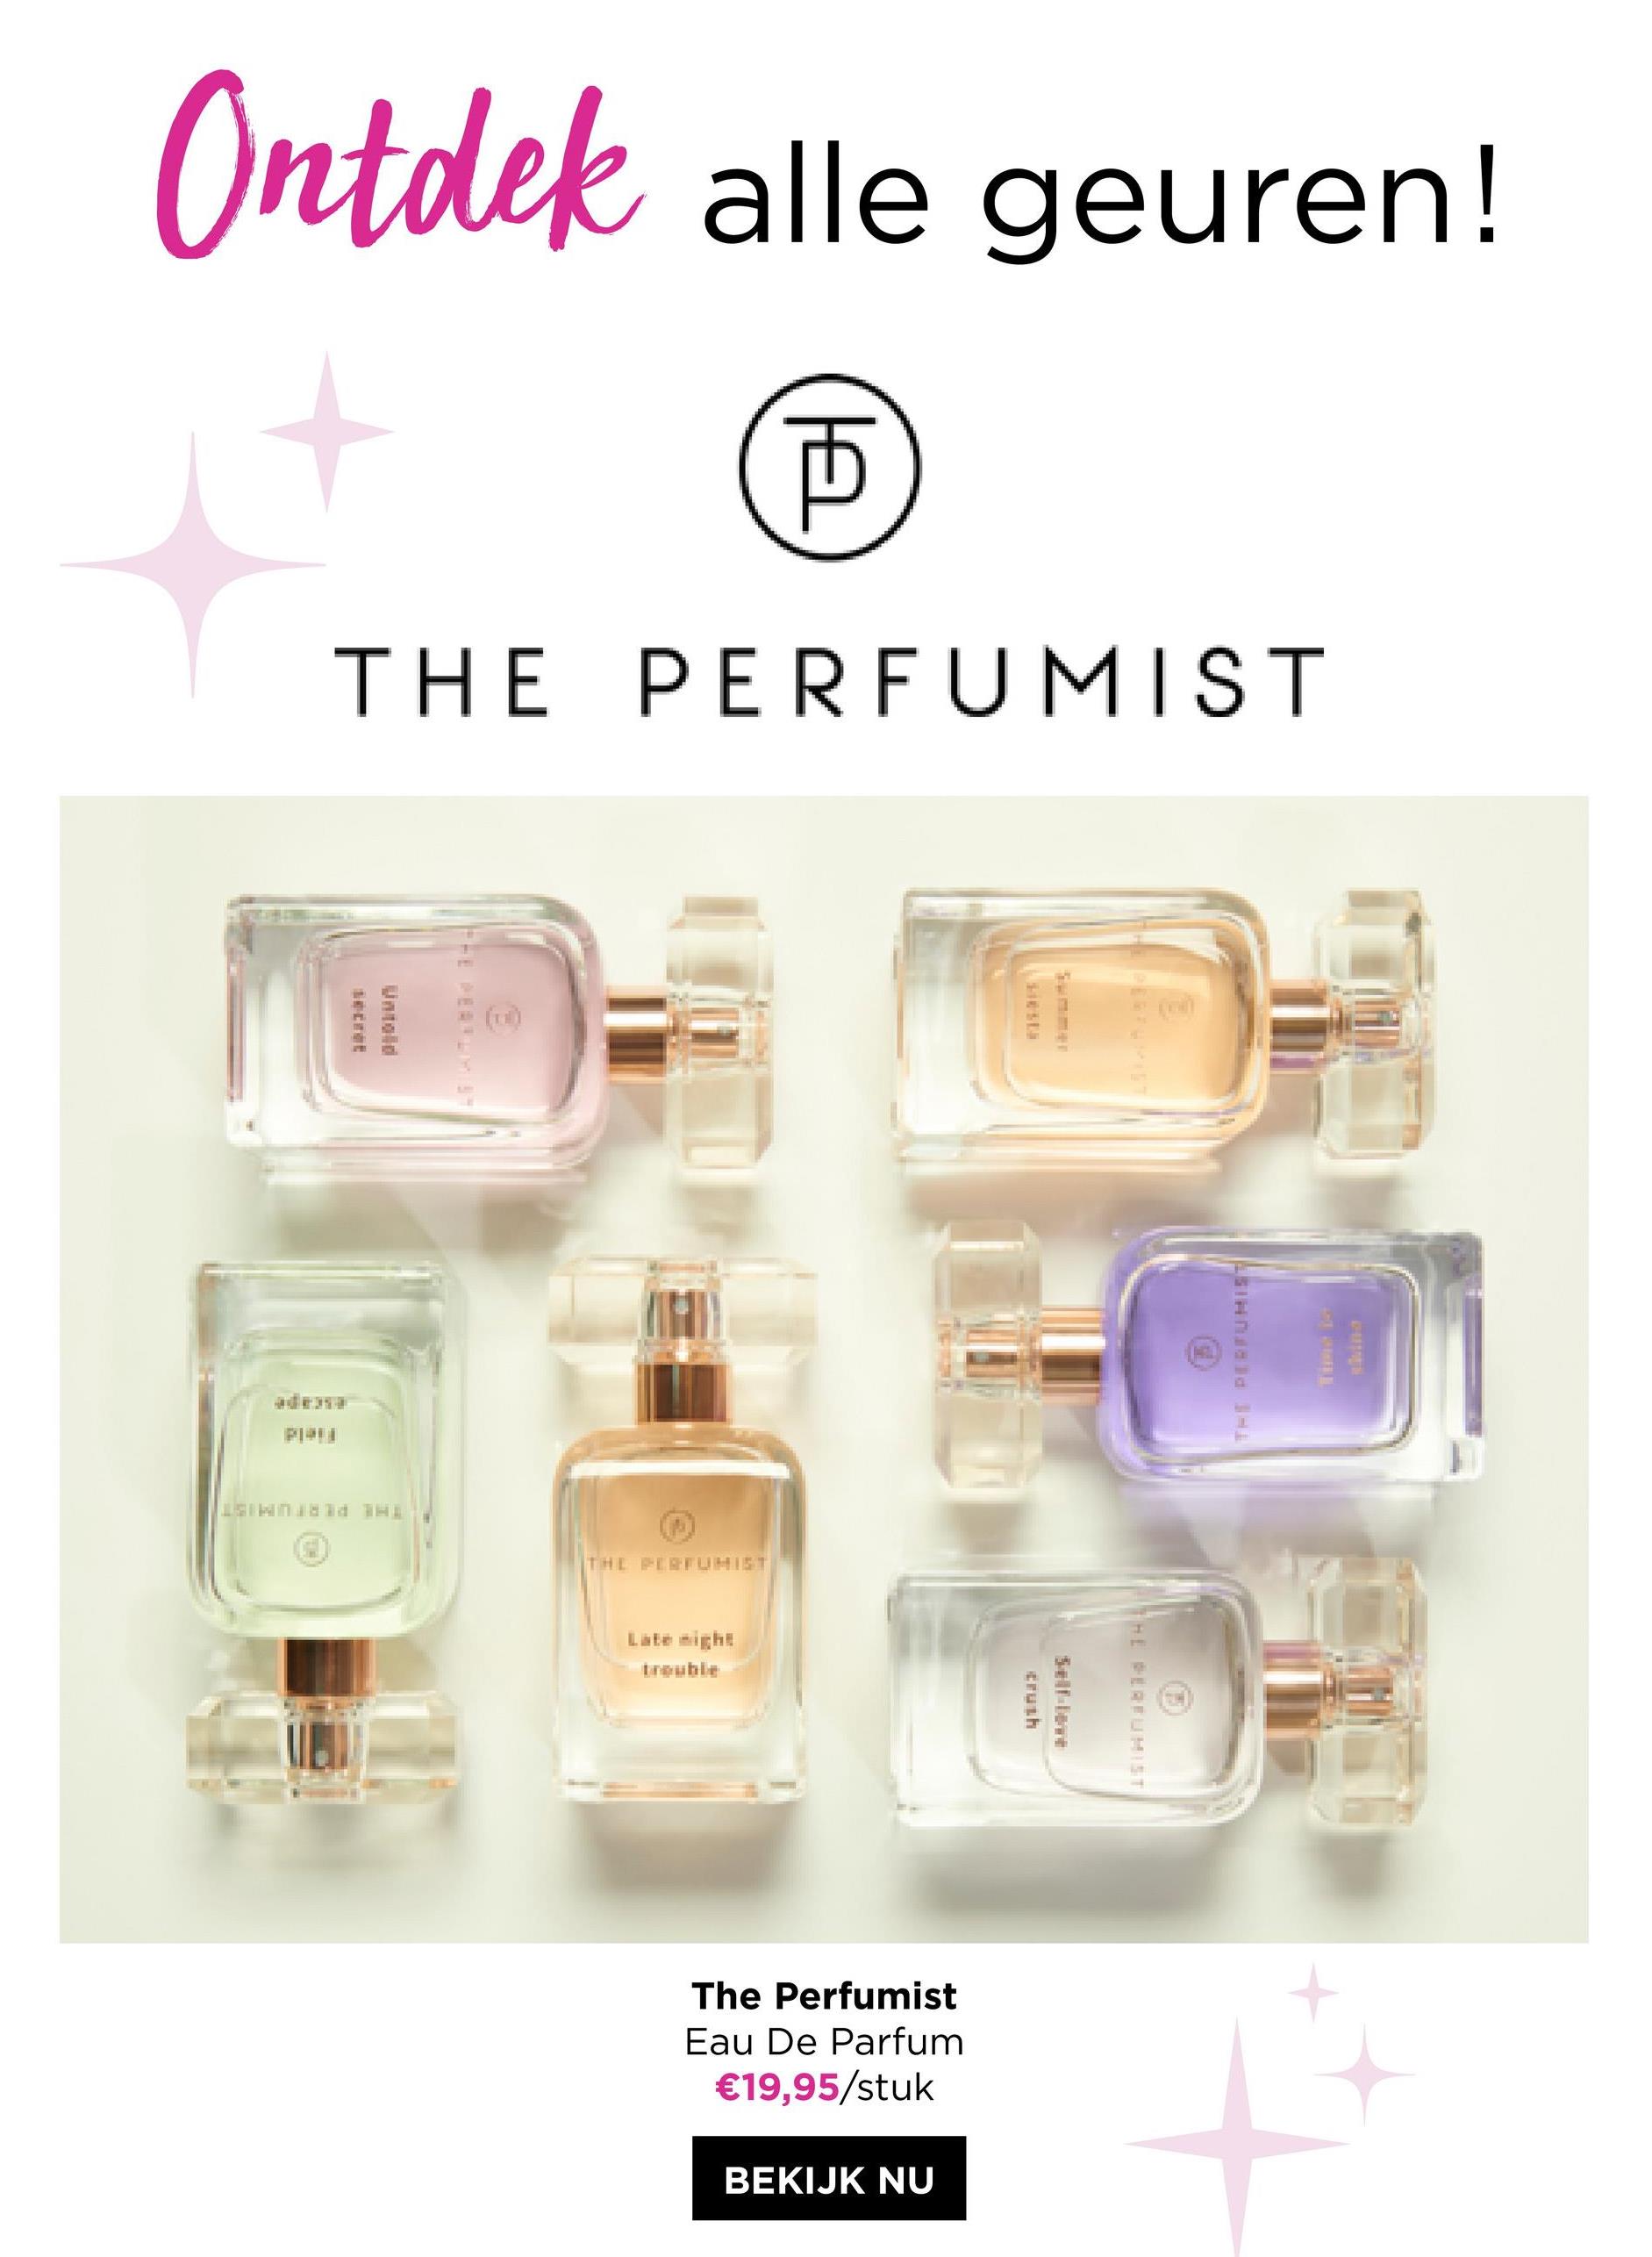 Ontdek alle geuren!
5
THE PERFUMIST
secret
SIND THE
|A
THE PERFUMIST
The Perfumist
Eau De Parfum
€19,95/stuk
BEKIJK NU
crush
THE PERFUMIST
SINDICld Hi